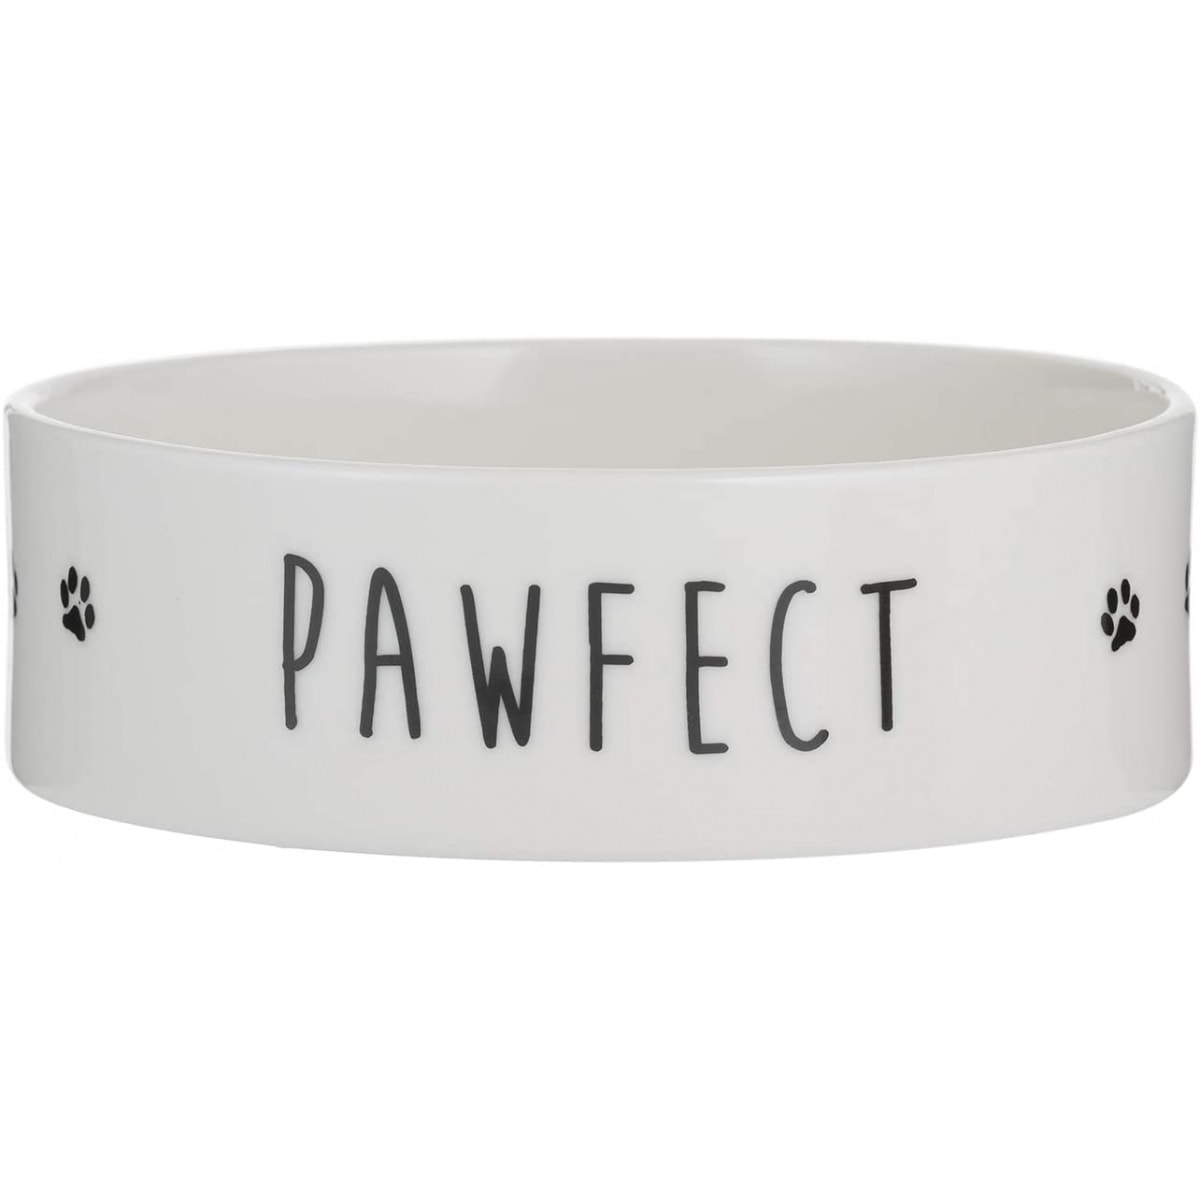 Pawfect Dog Bowl Product Image